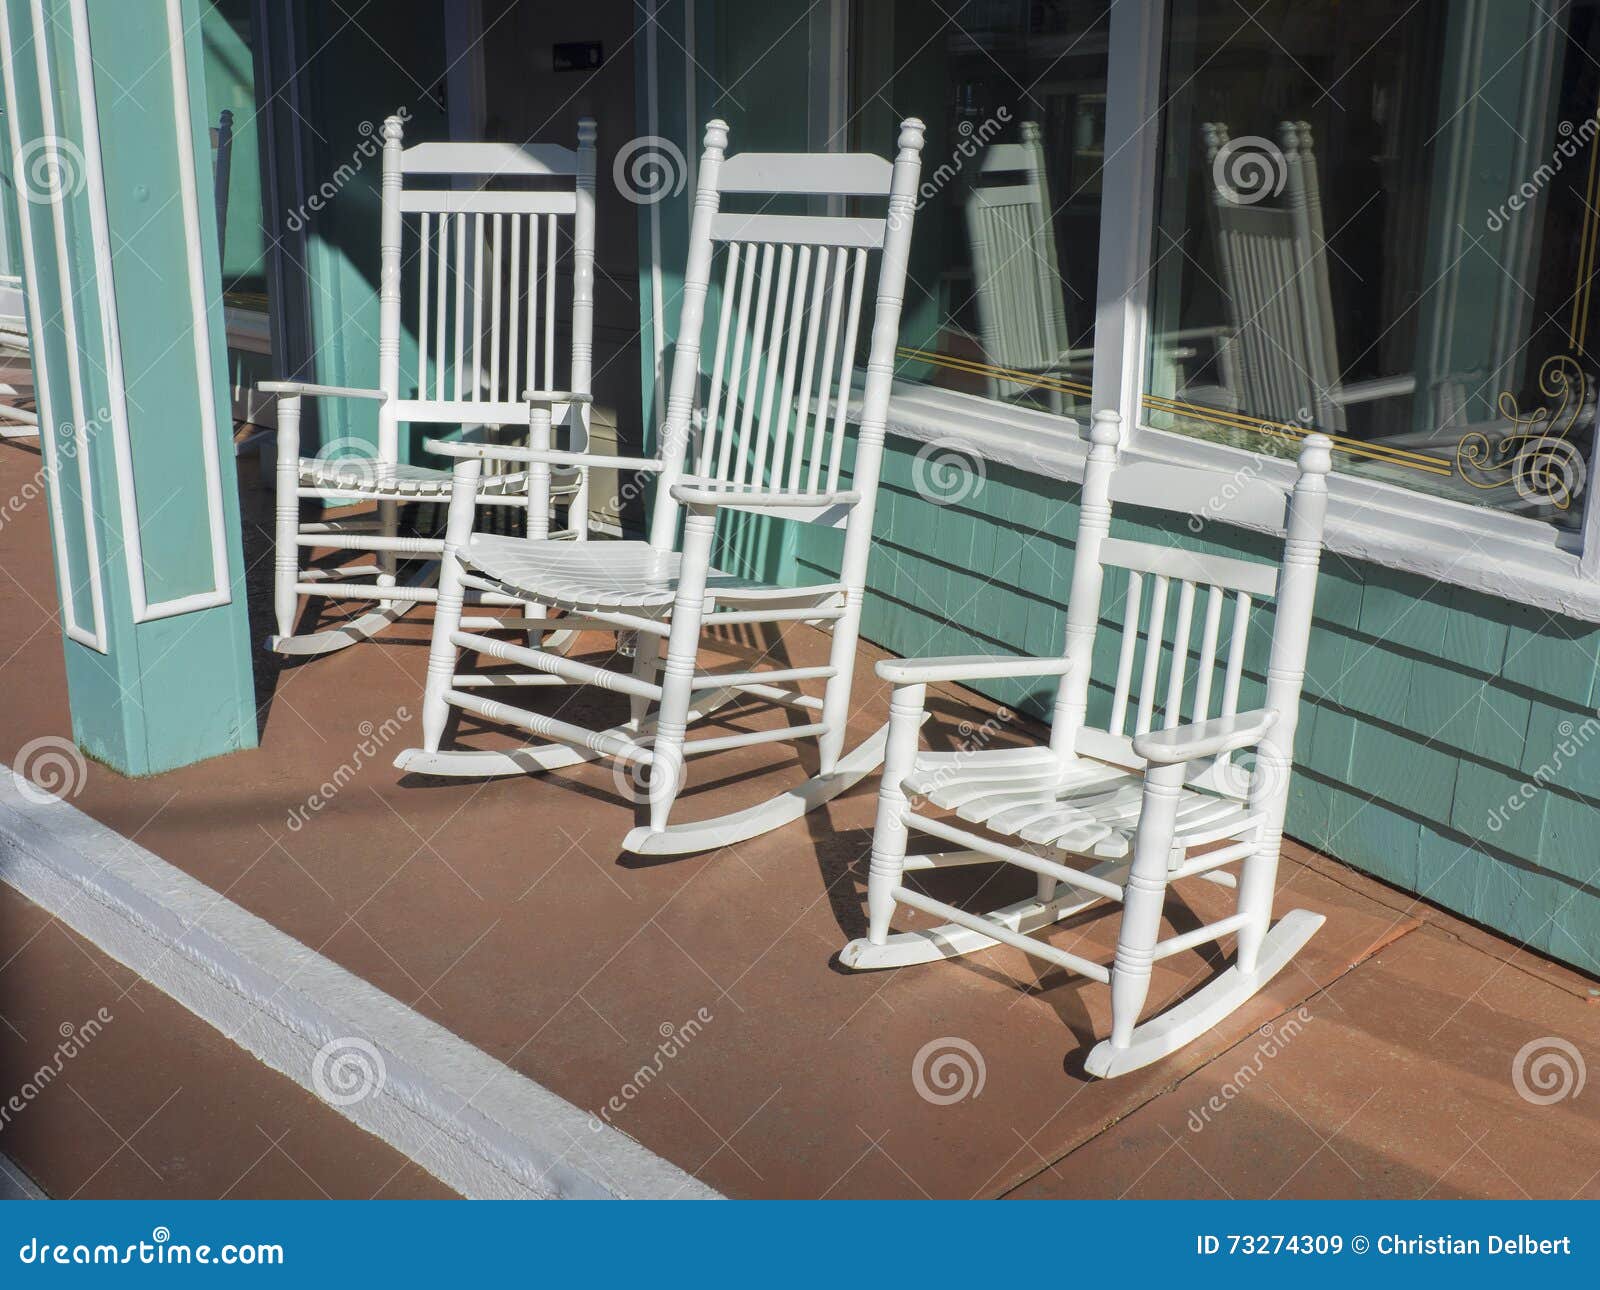 Rocking Chairs On Store Sidewalk Stock Image Image Of Wood